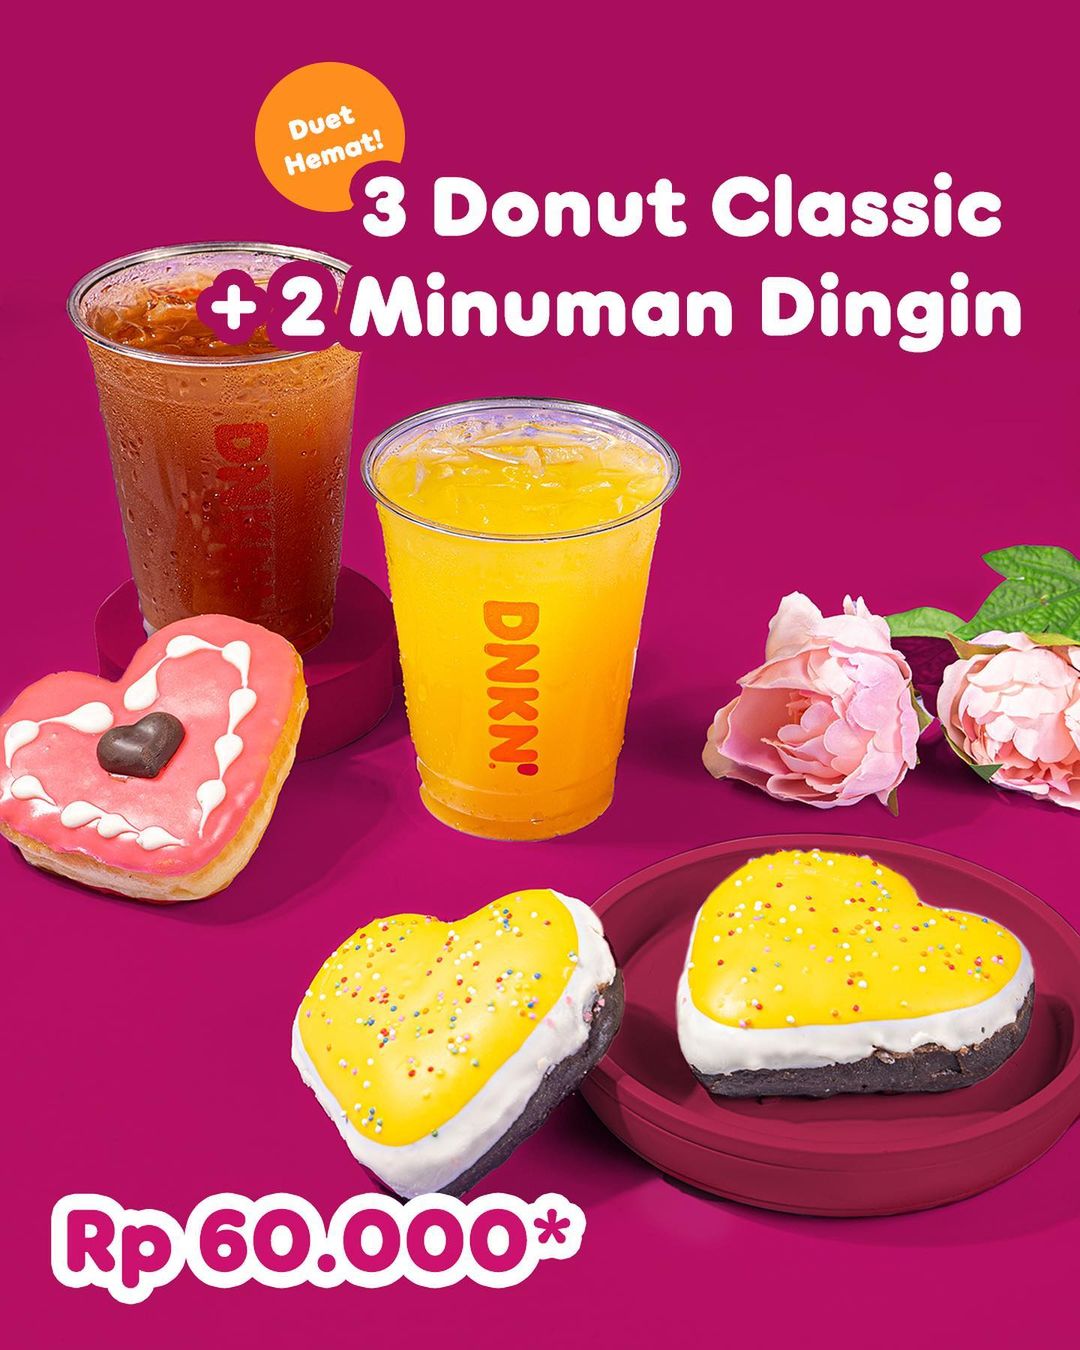 PROMO DUNKIN DUET HEMAT - 3 Donut Classic + 2 minuman dingin cuma Rp. 60.000